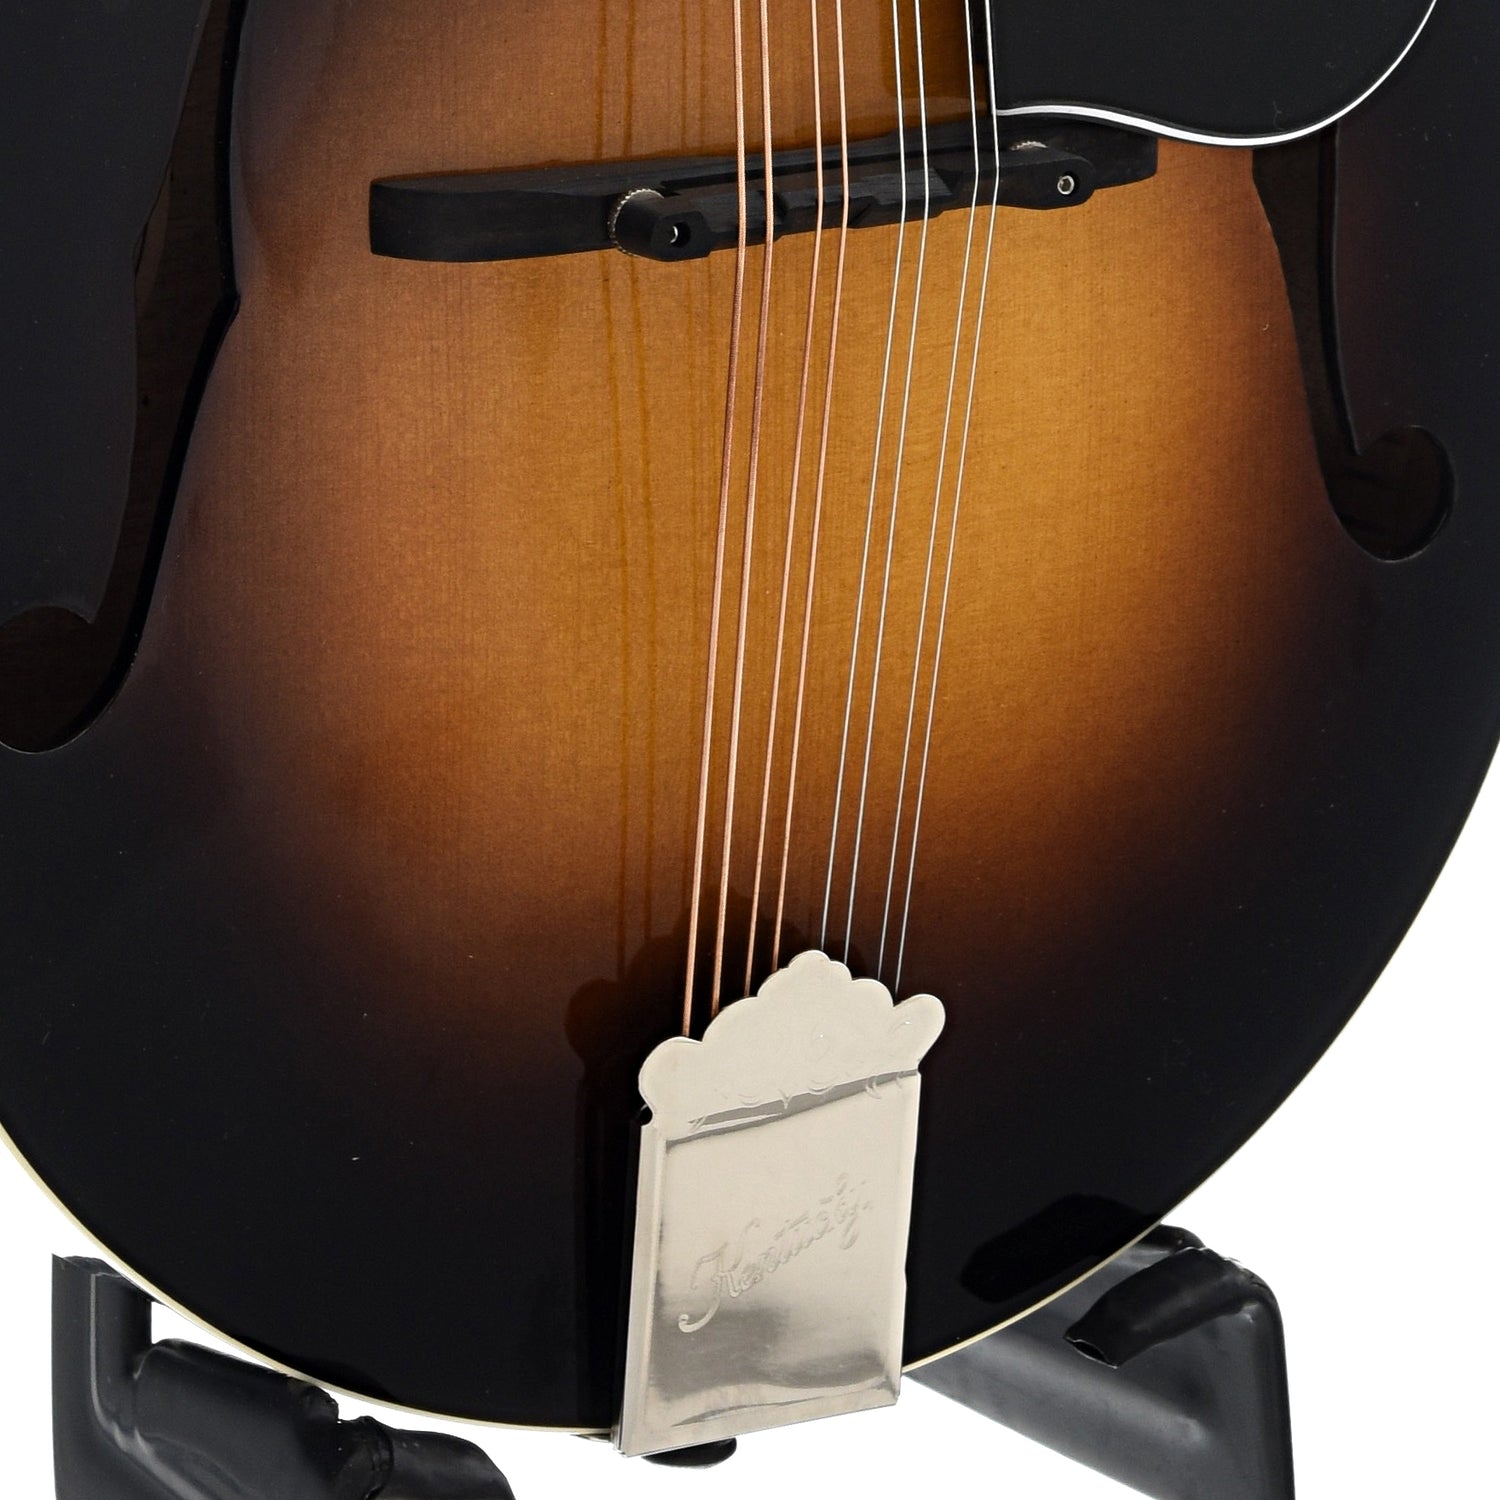 Tailpiece of Kentucky KM-150 Mandolin, A-Model